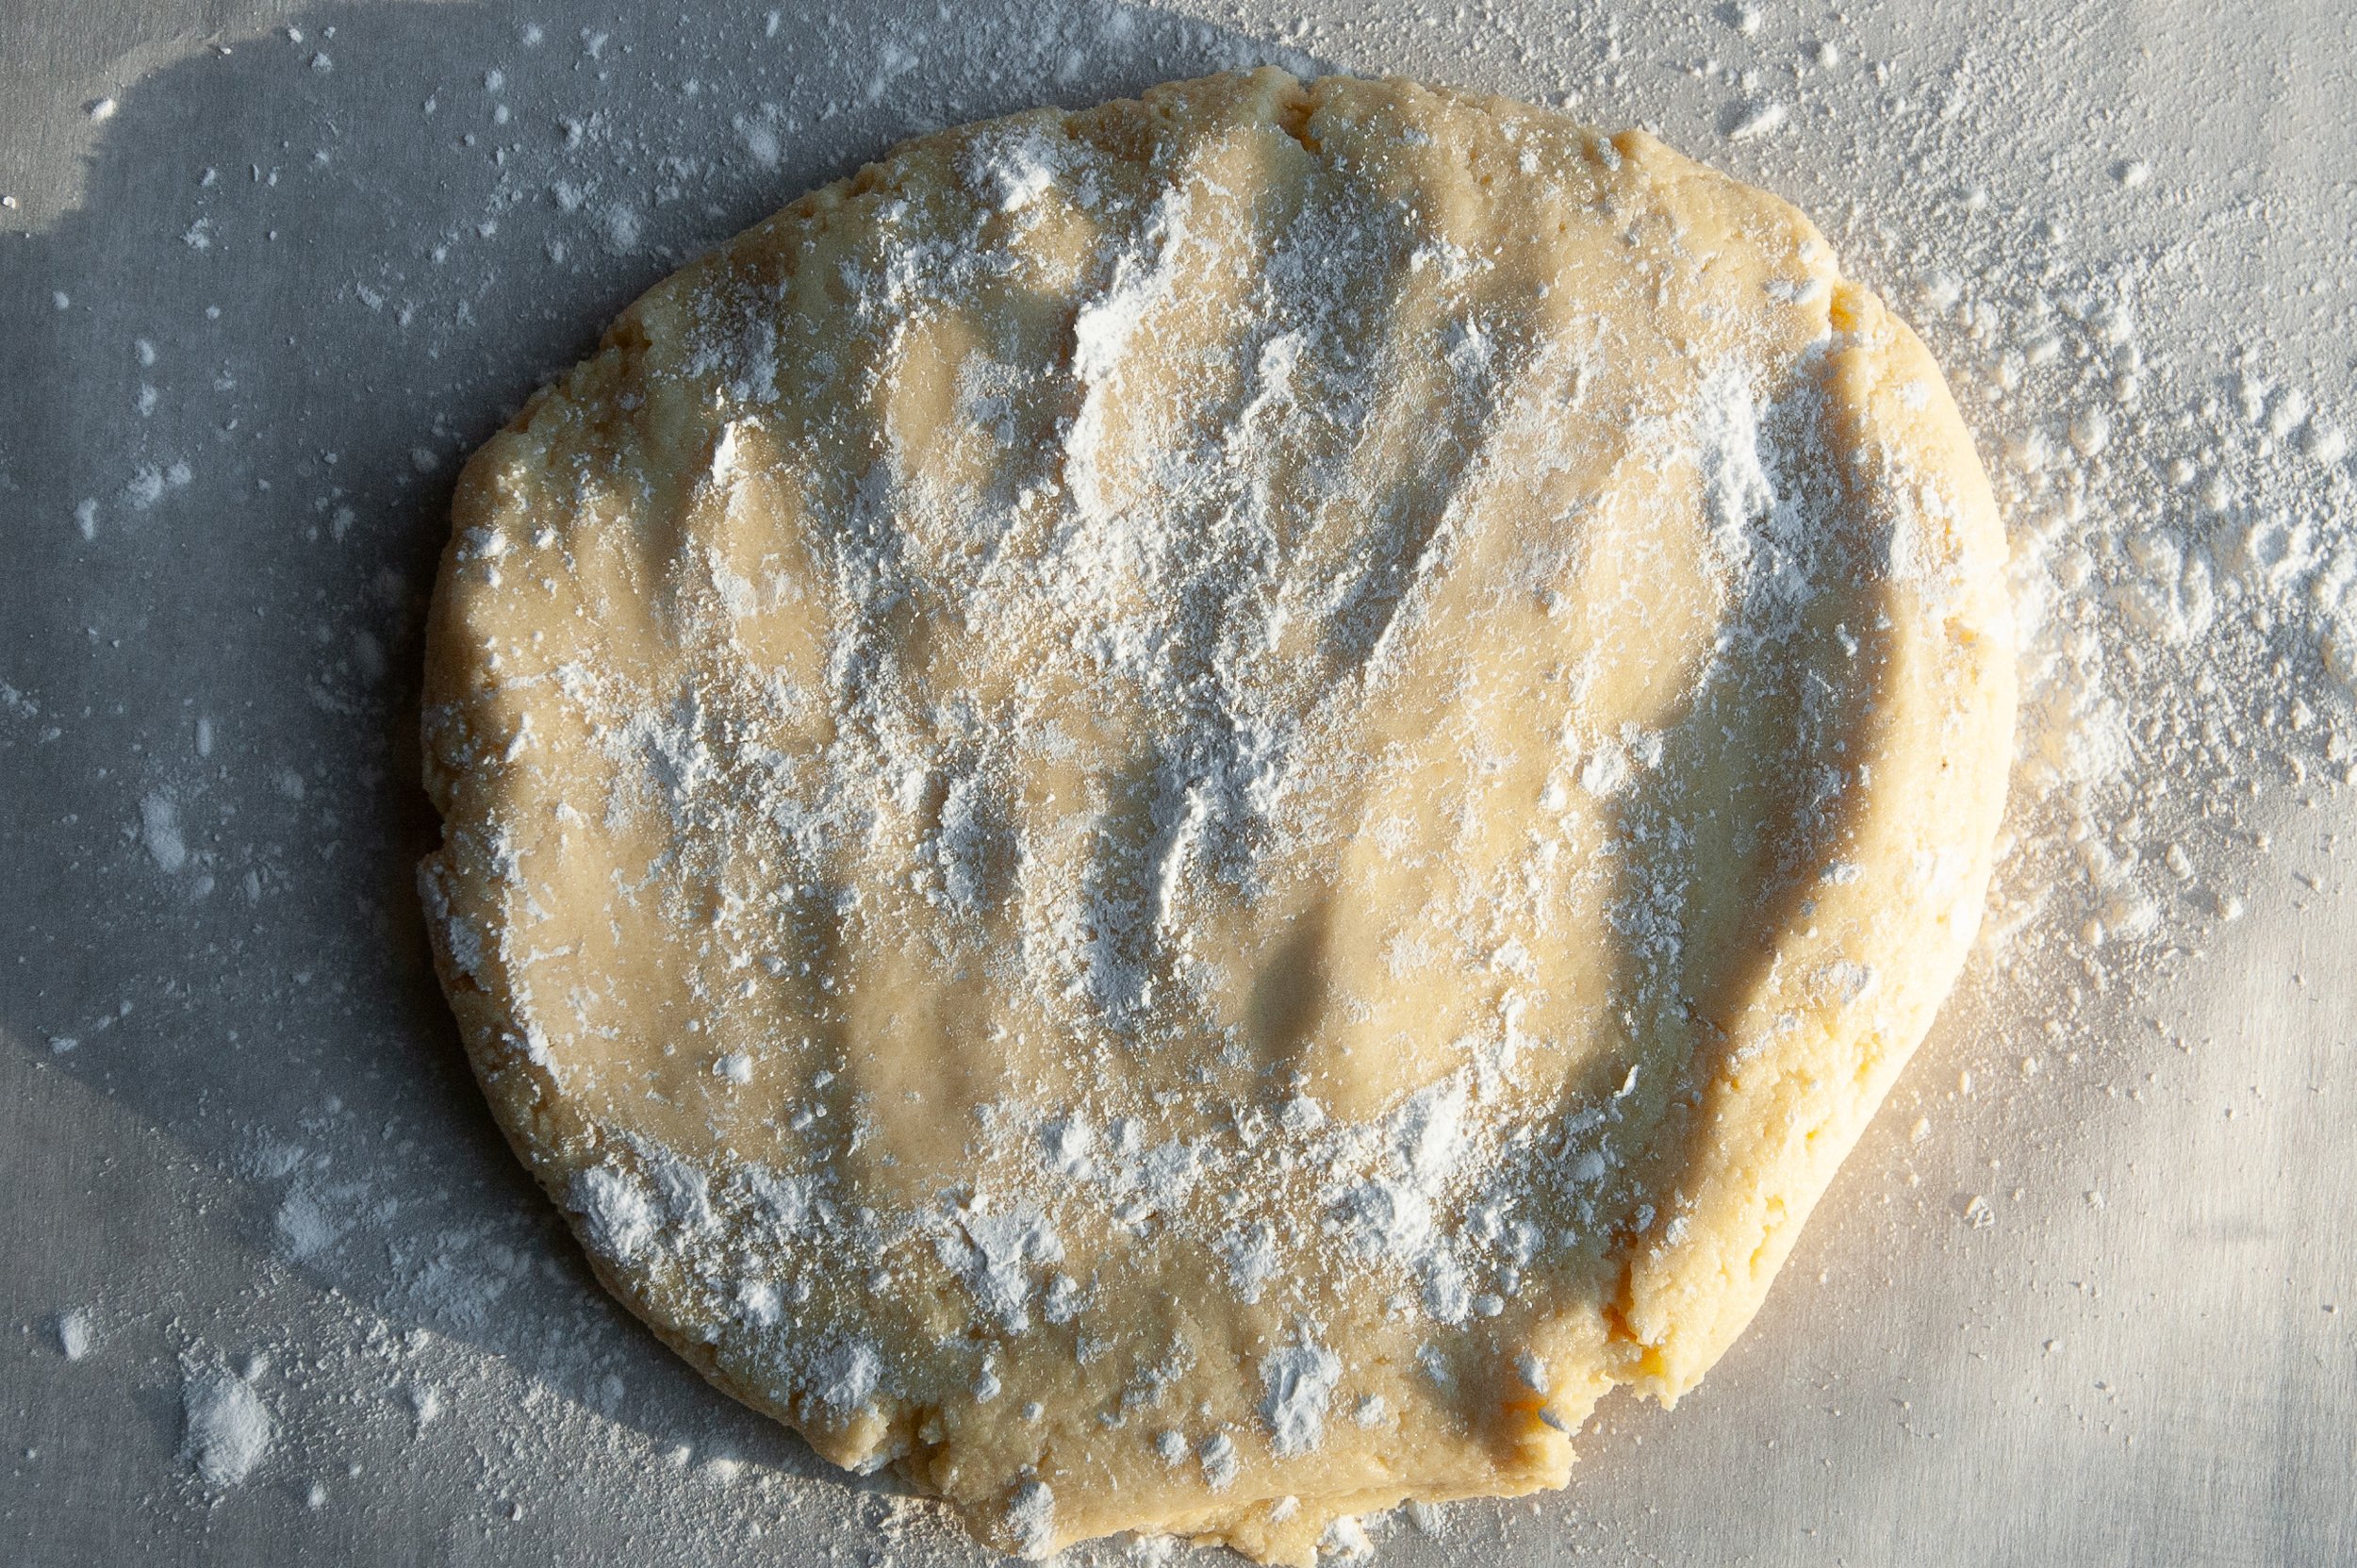 How to Make Gluten Free Halloween Sugar Cookies